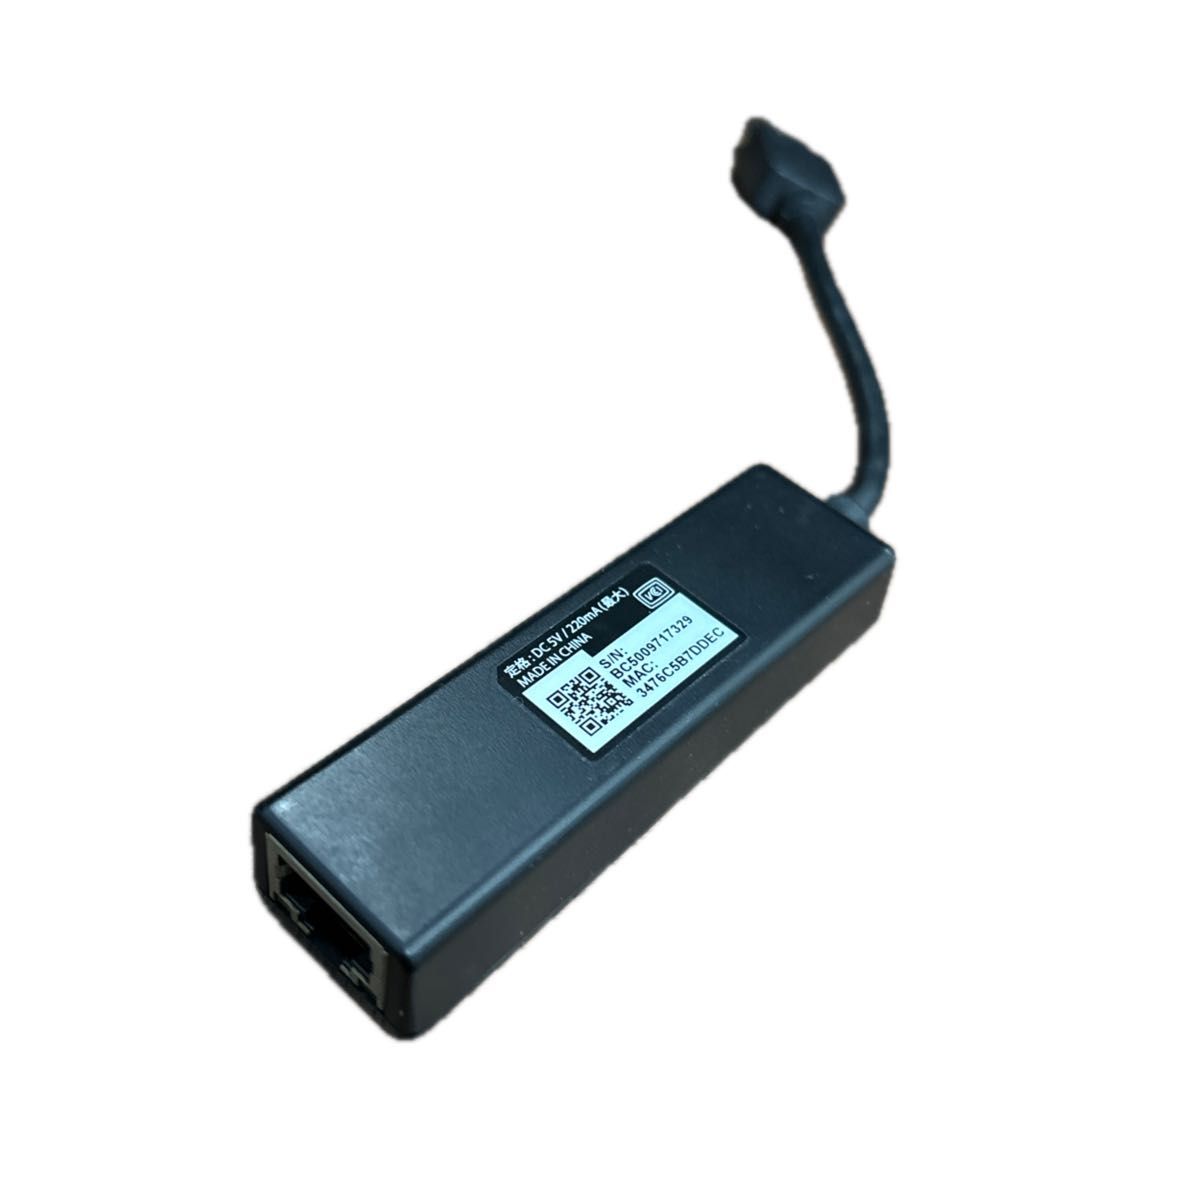 IODATA USB LANケーブル 変換アダプタ ETG5-US3